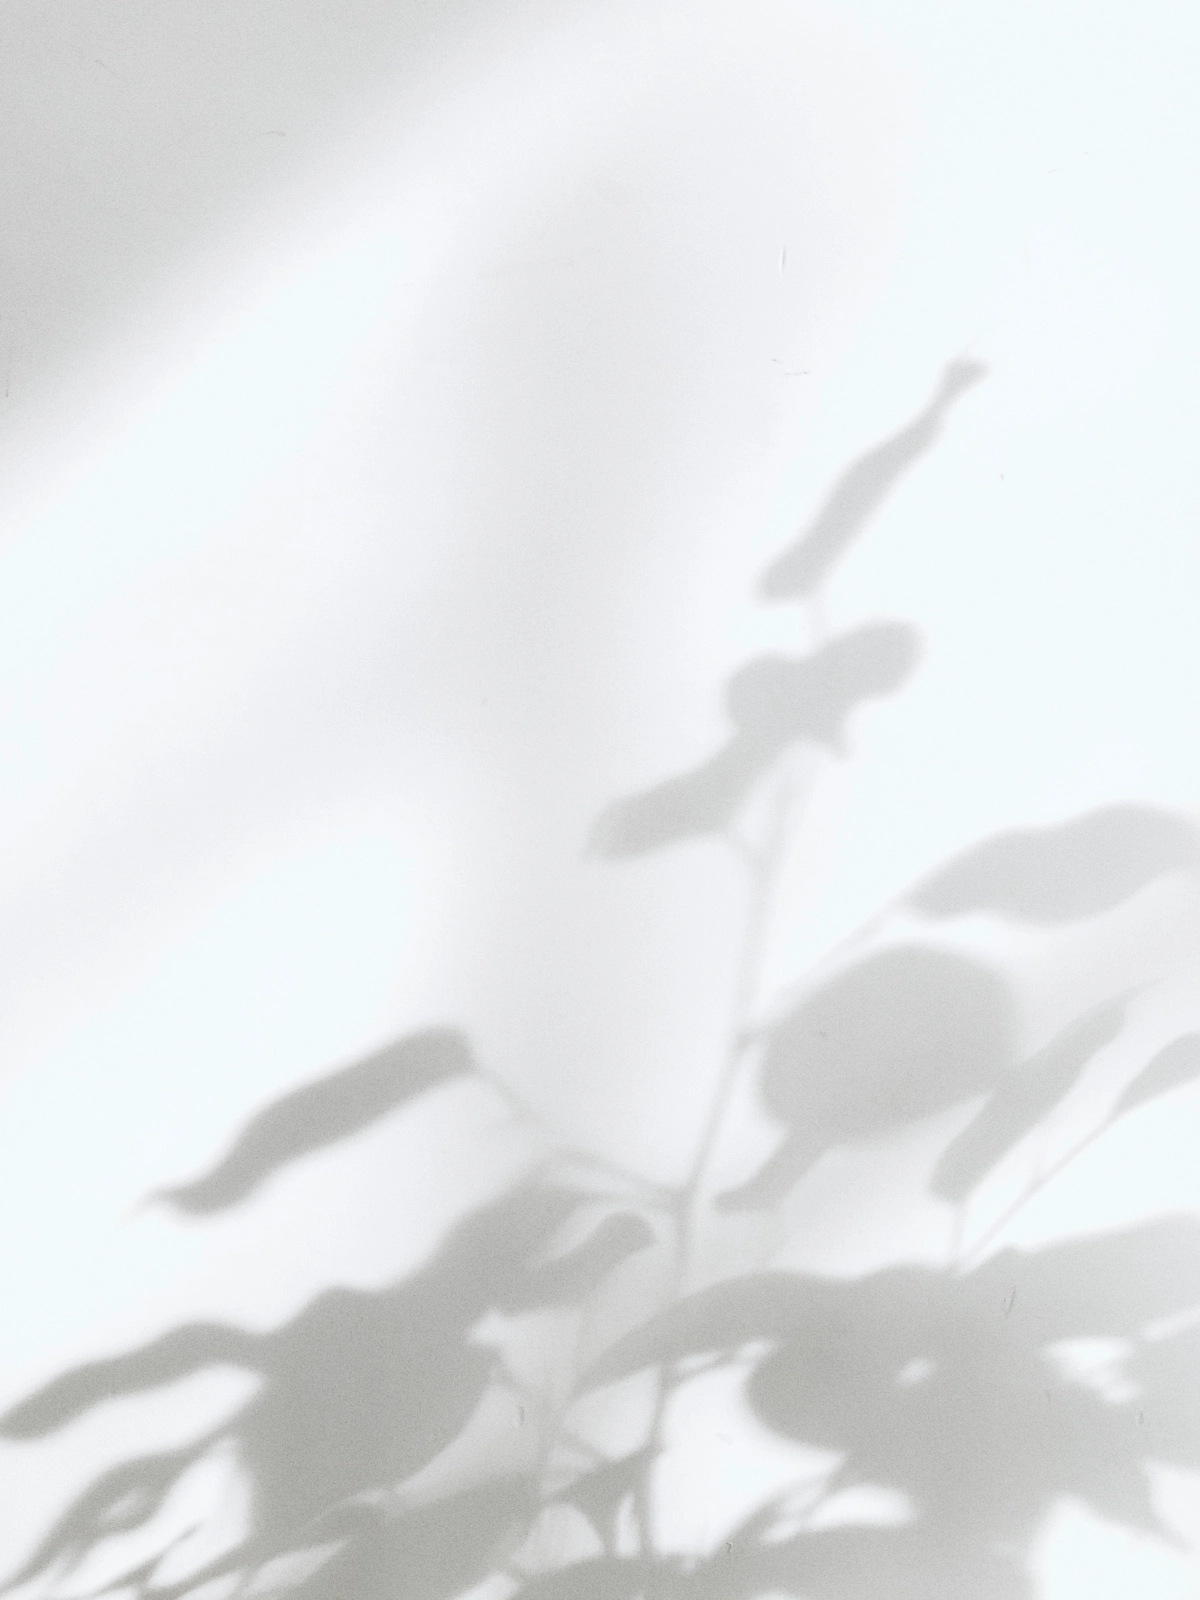 mur blanc reflets plante verte feuilles lumiere soleil rayons photograhie